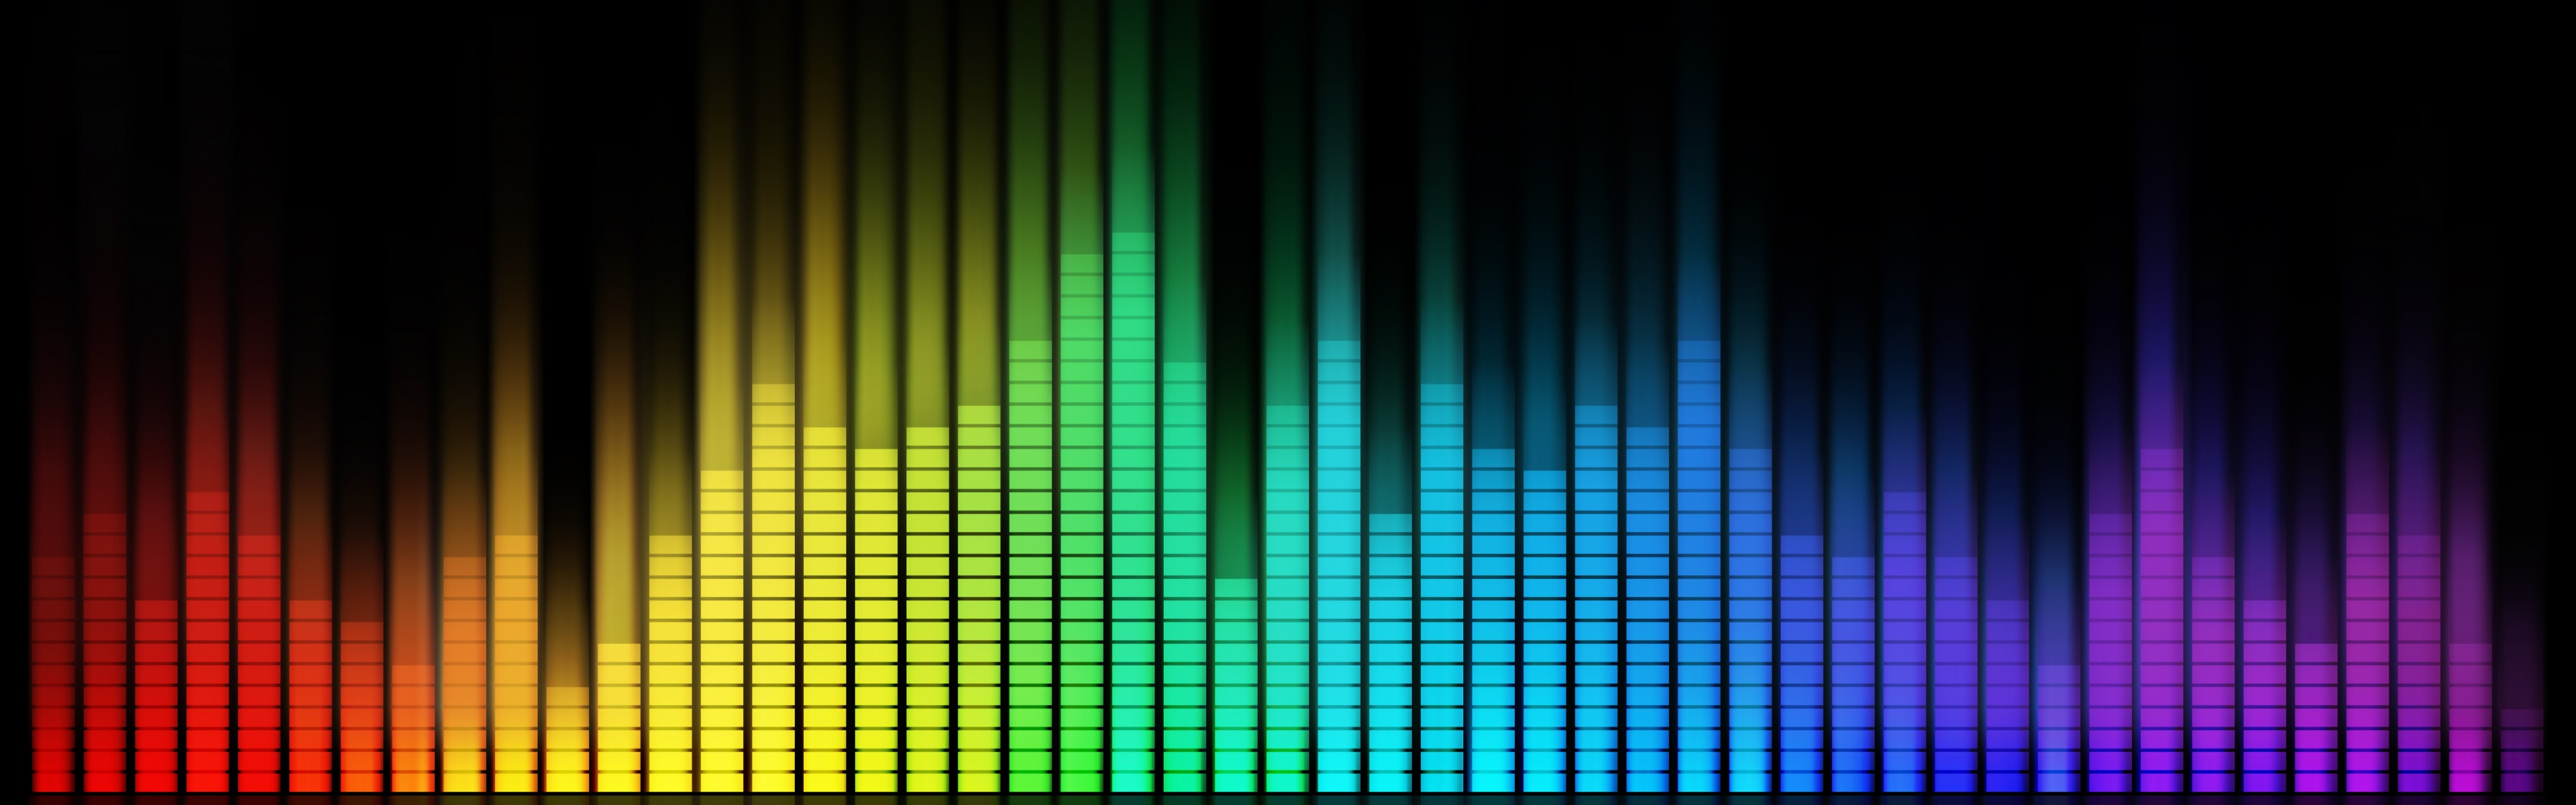 Music Equalizer iPhone Panoramic Wallpaper iPad